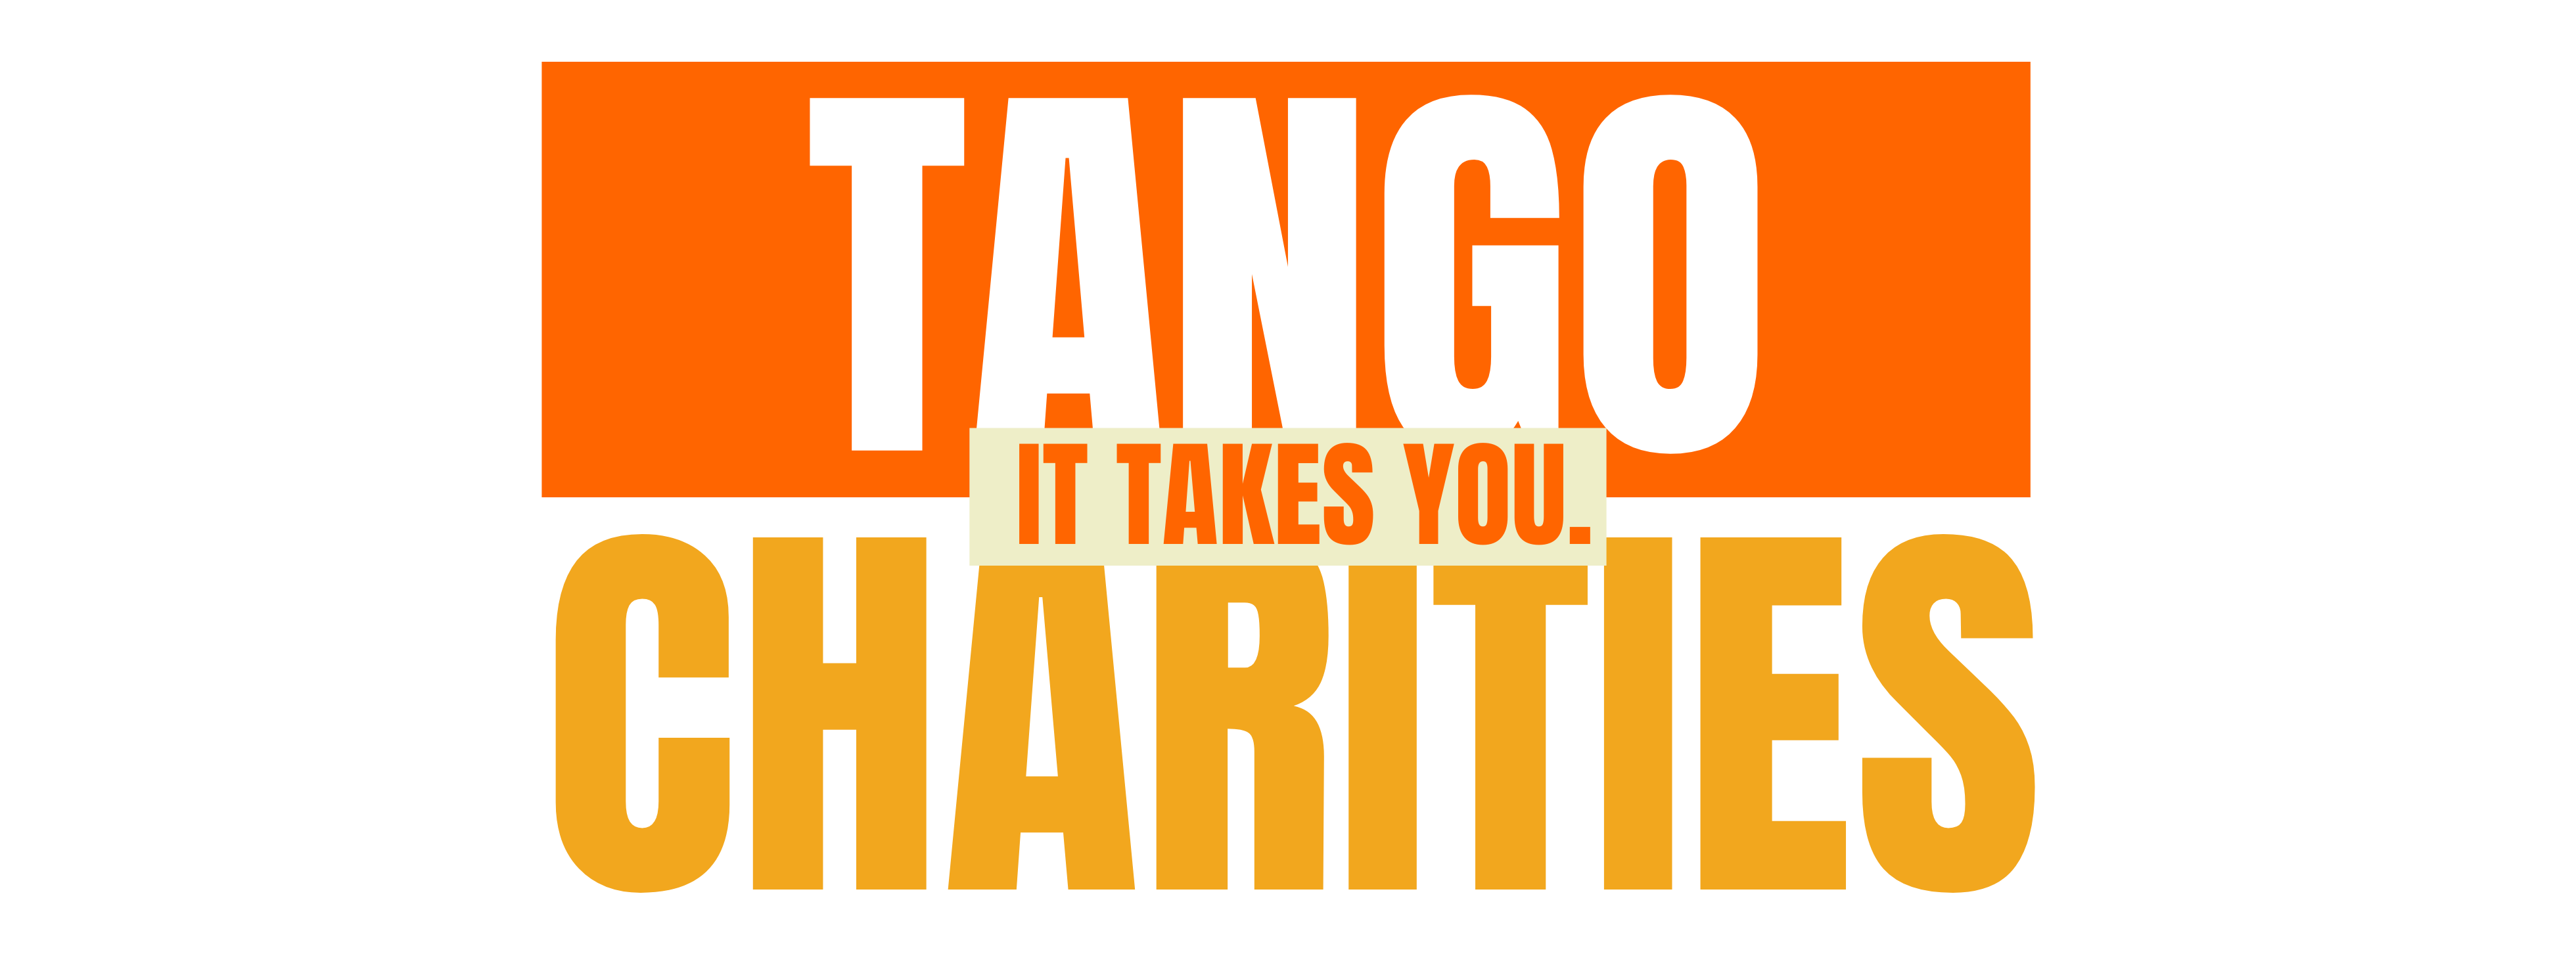 TangoCharities logo